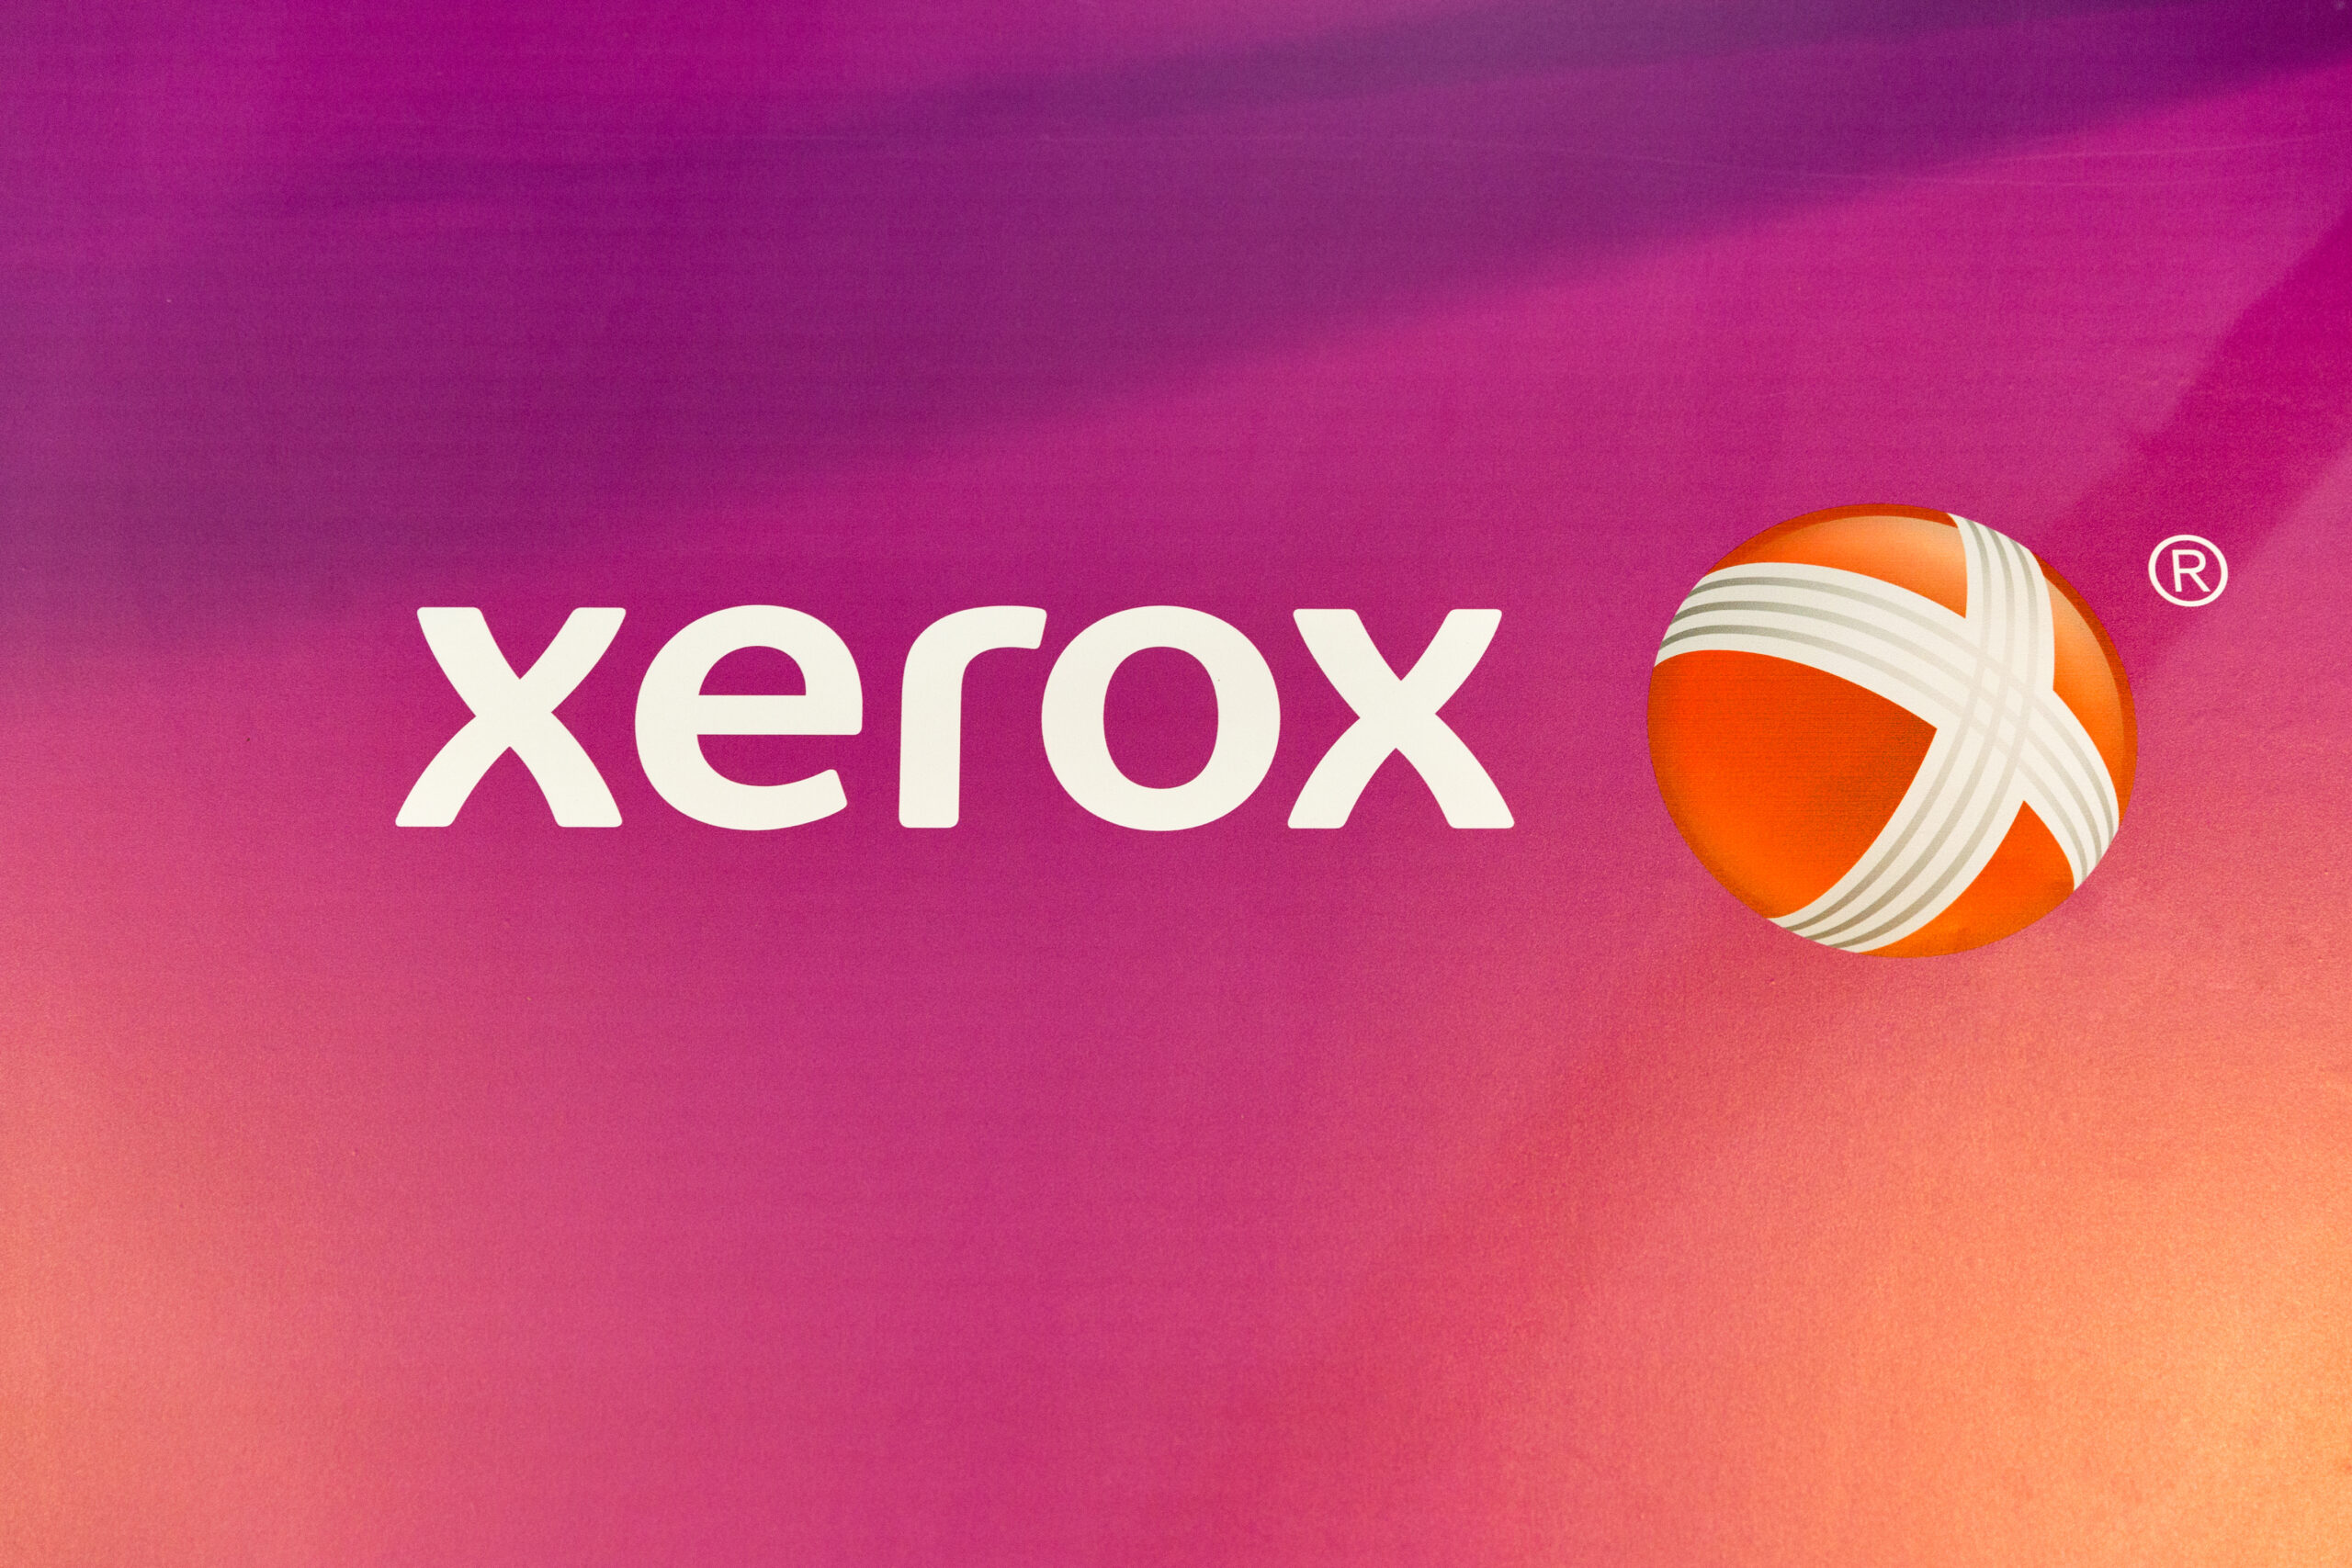 Xerox ransomware data breach